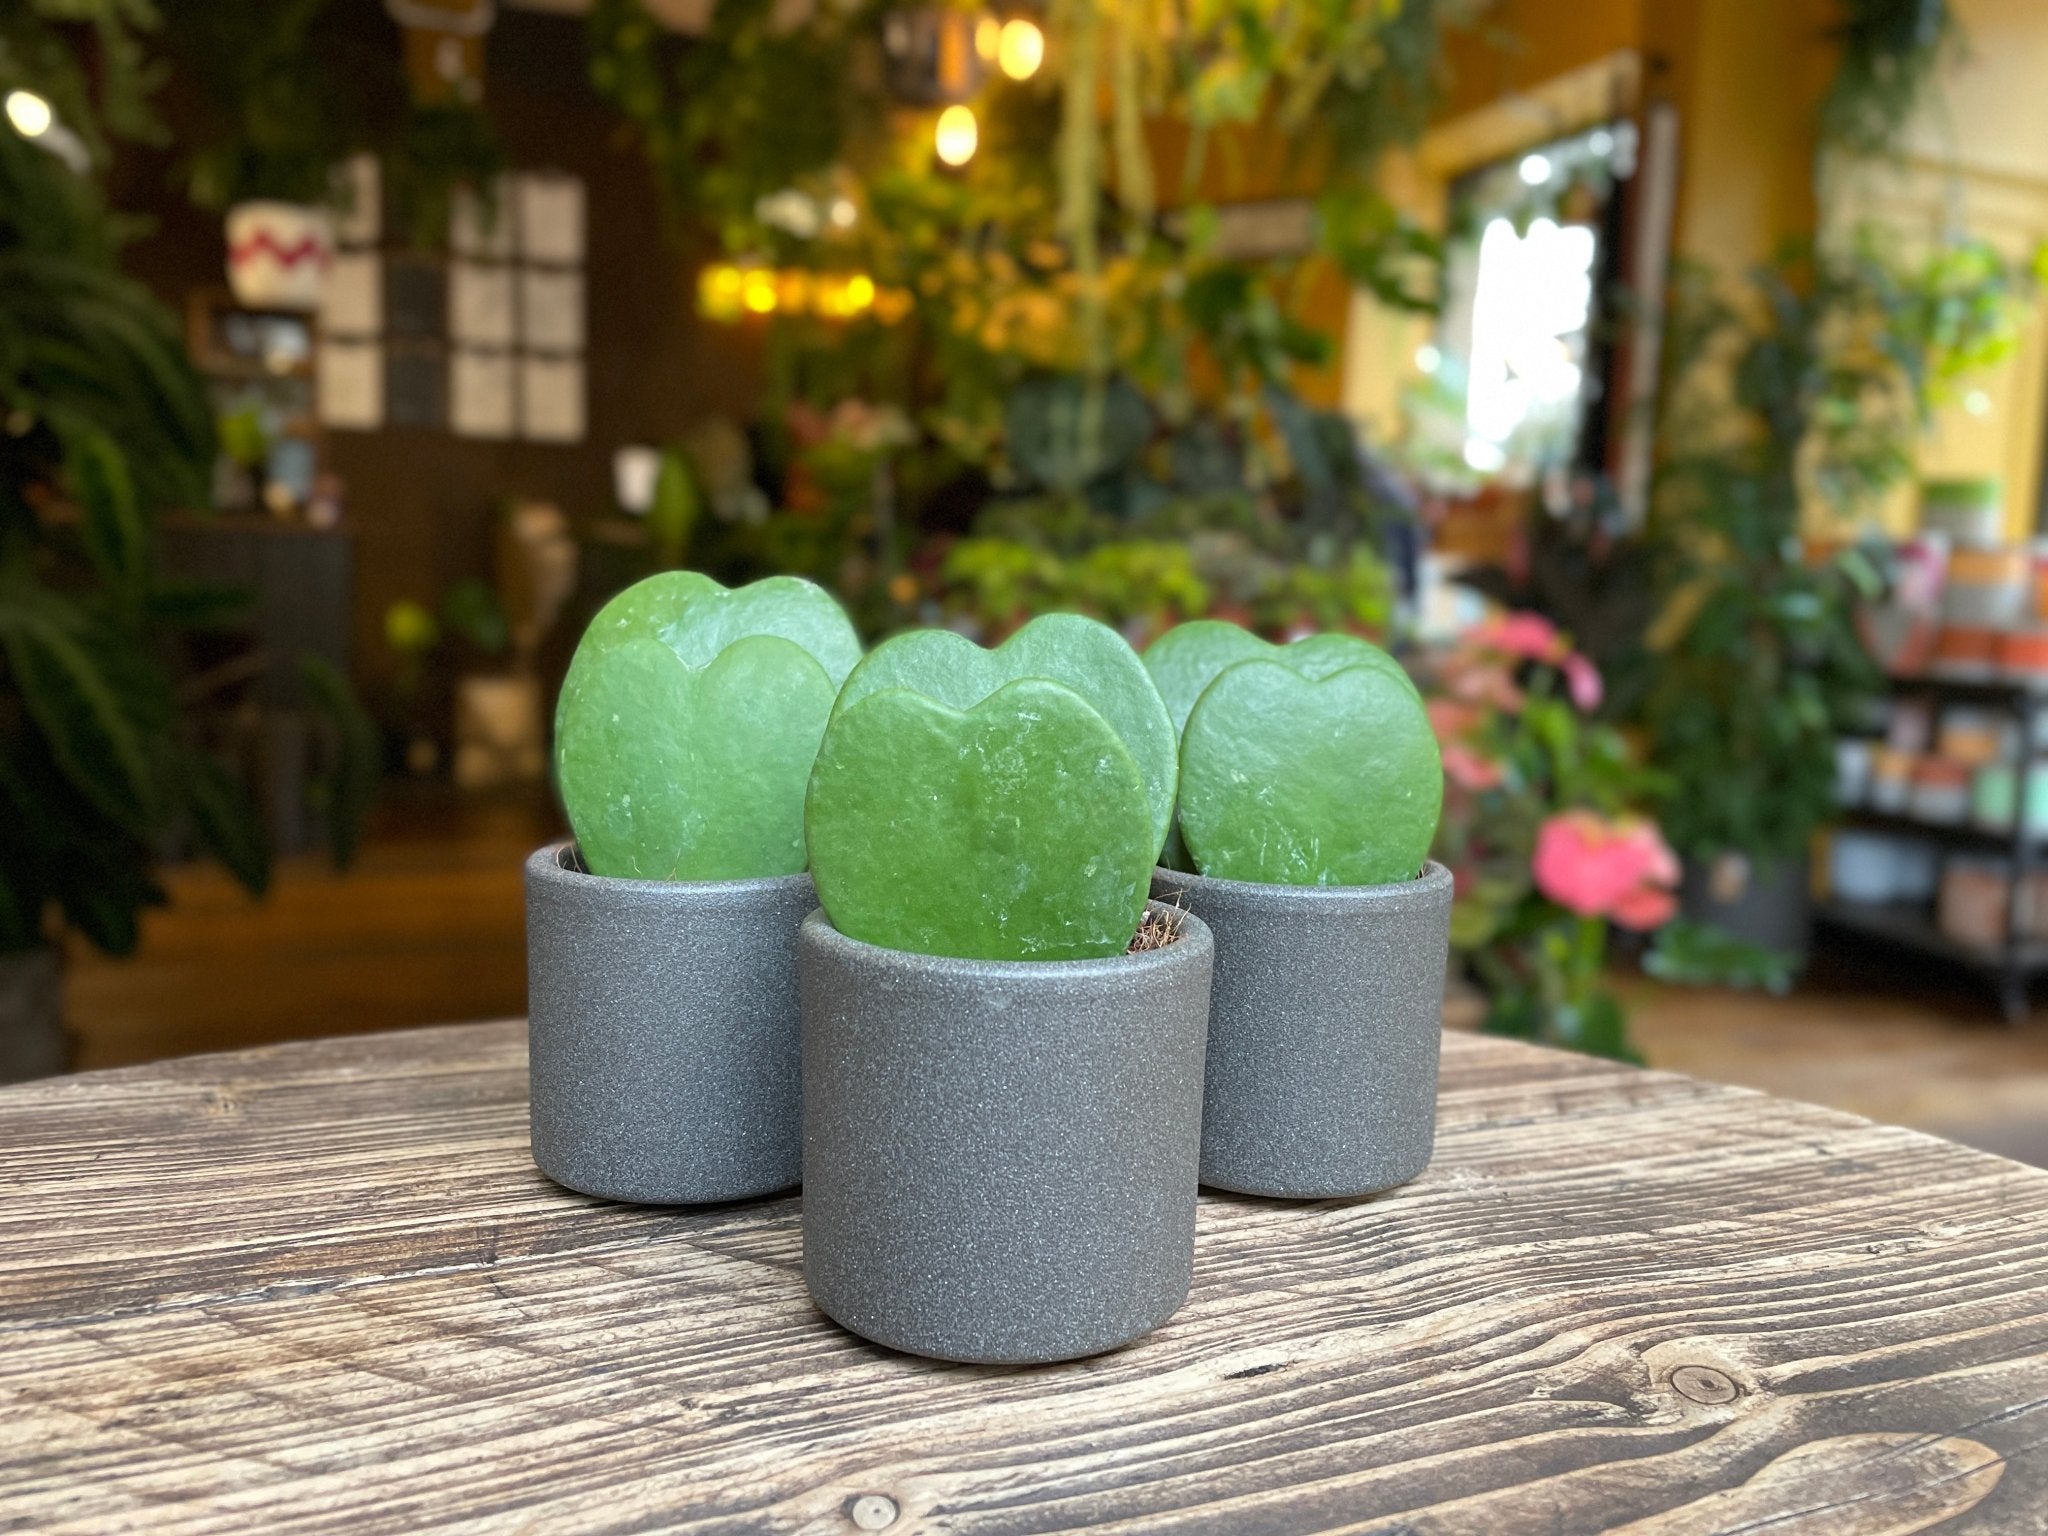 Hoya kerrii plants on display in grey plant pots. 